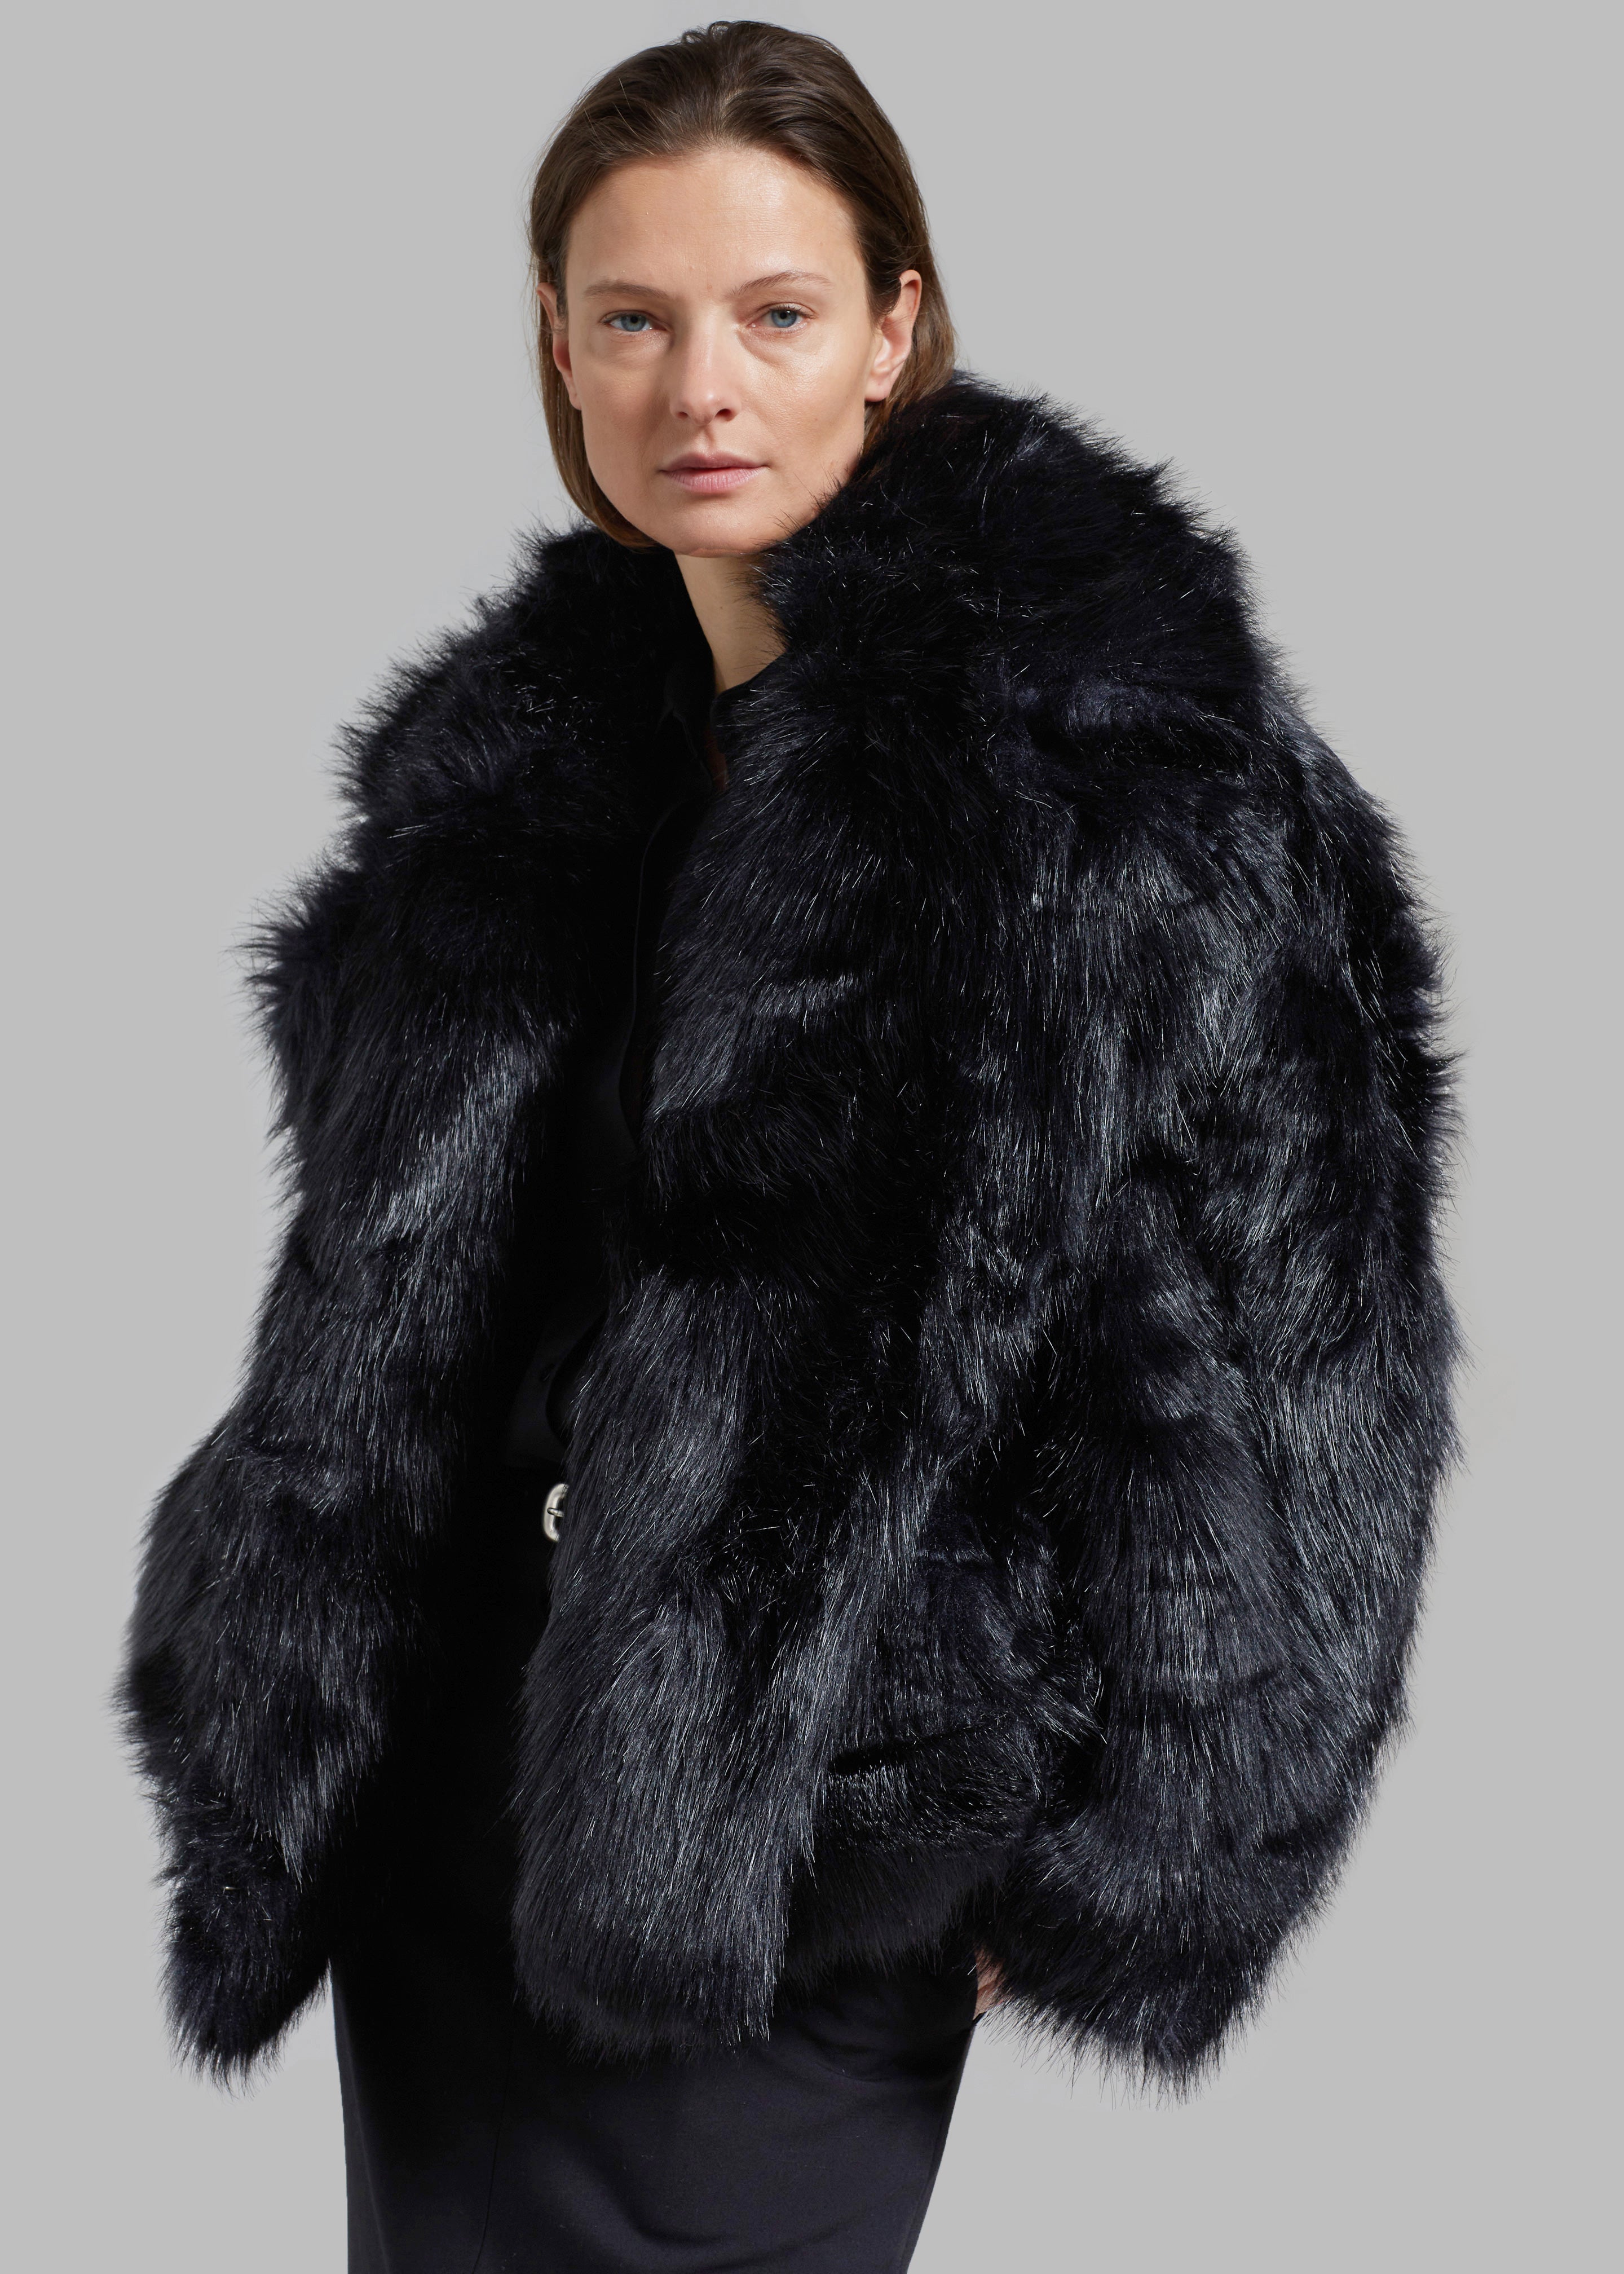 Fallon Short Faux Fur Coat - Black - 4